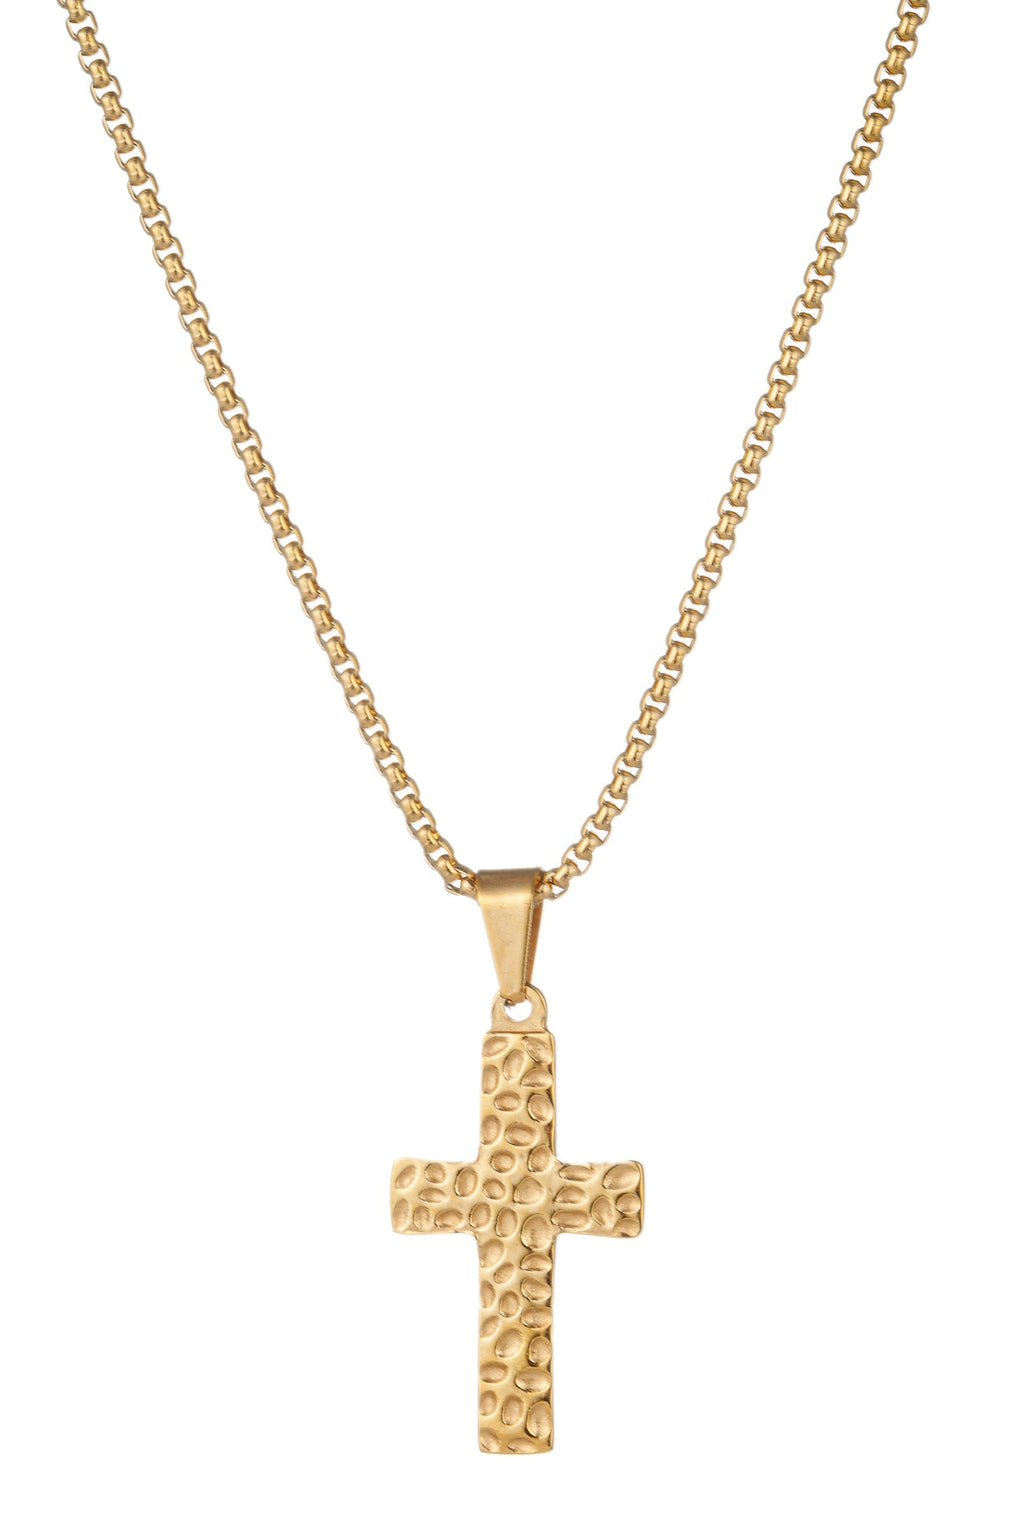 Elliot Cross Pendant Necklace: A Graceful Emblem of Faith and Style.